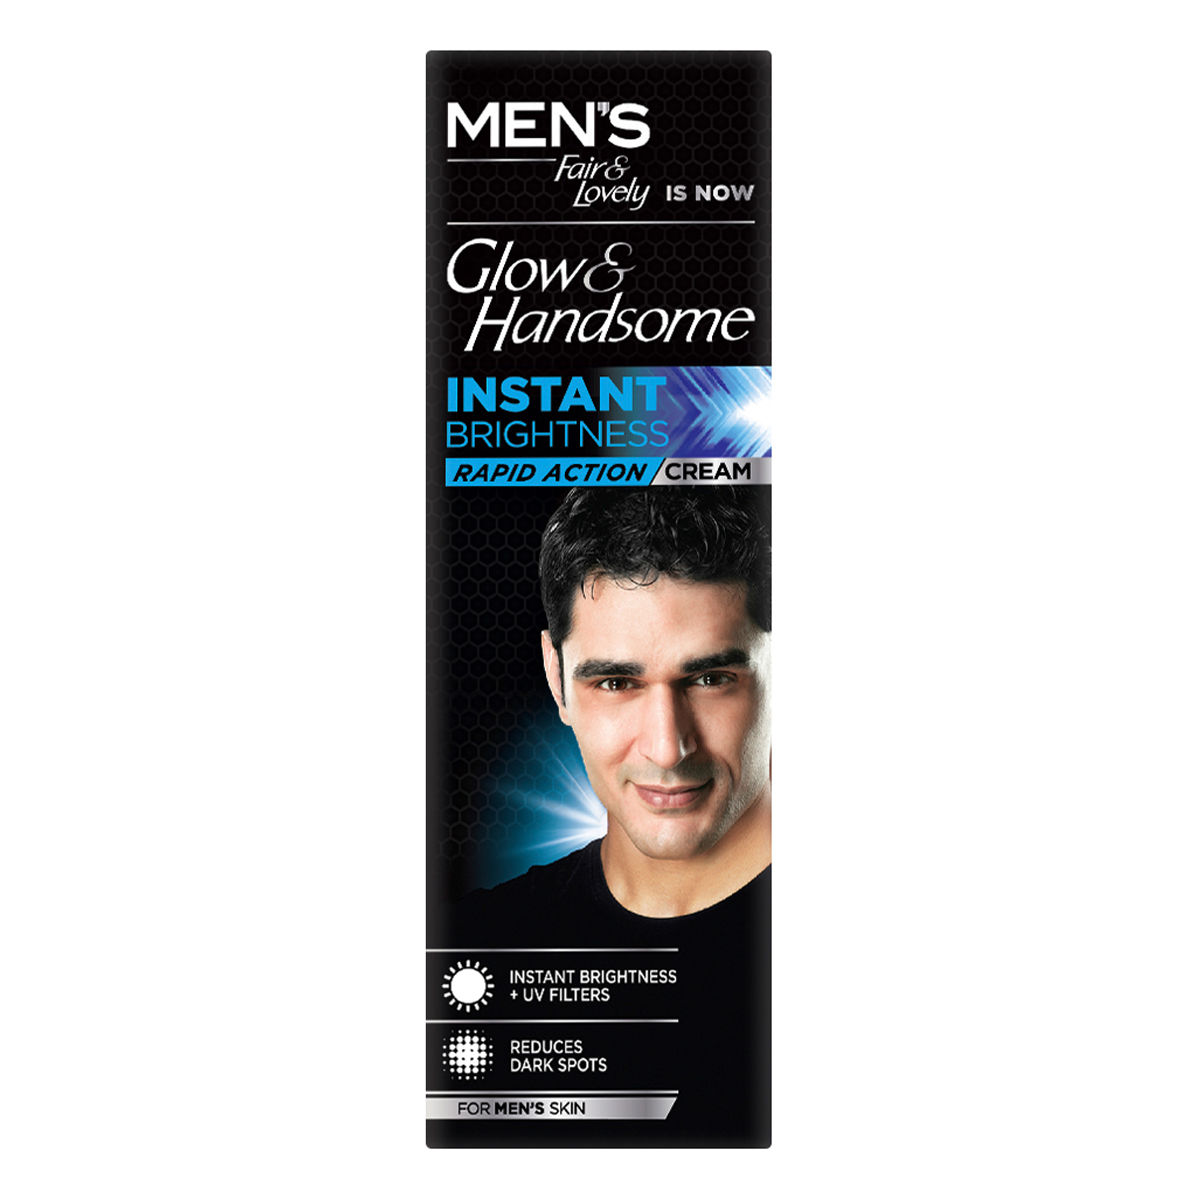 Buy Glow & Handsome Instant Brightness Cream for Men, 25 gm Online